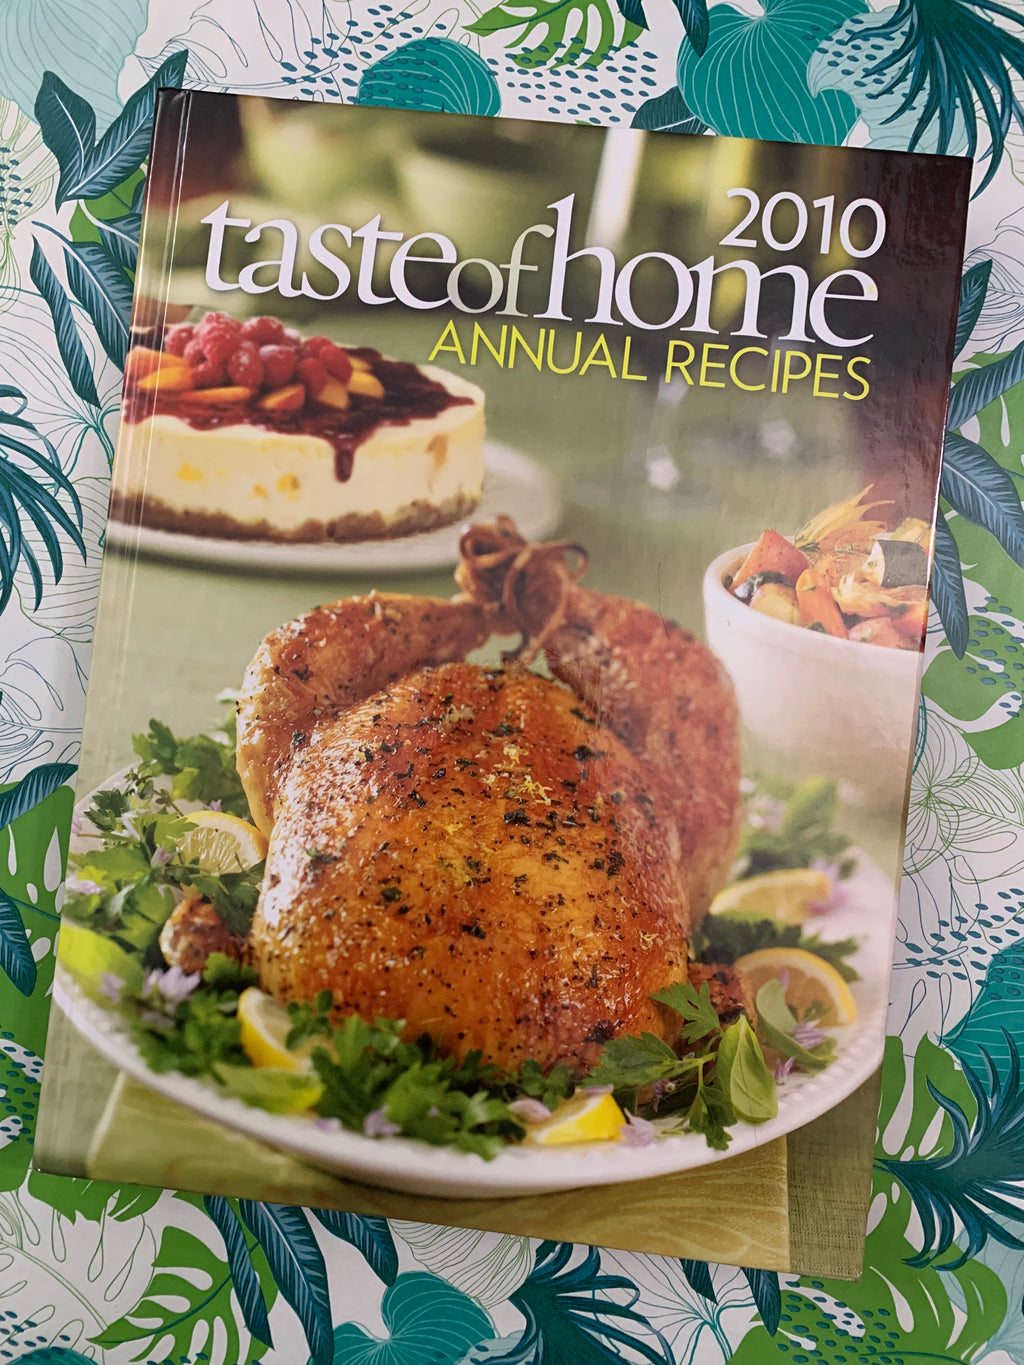 Taste of Home: Annual Recipes 2010